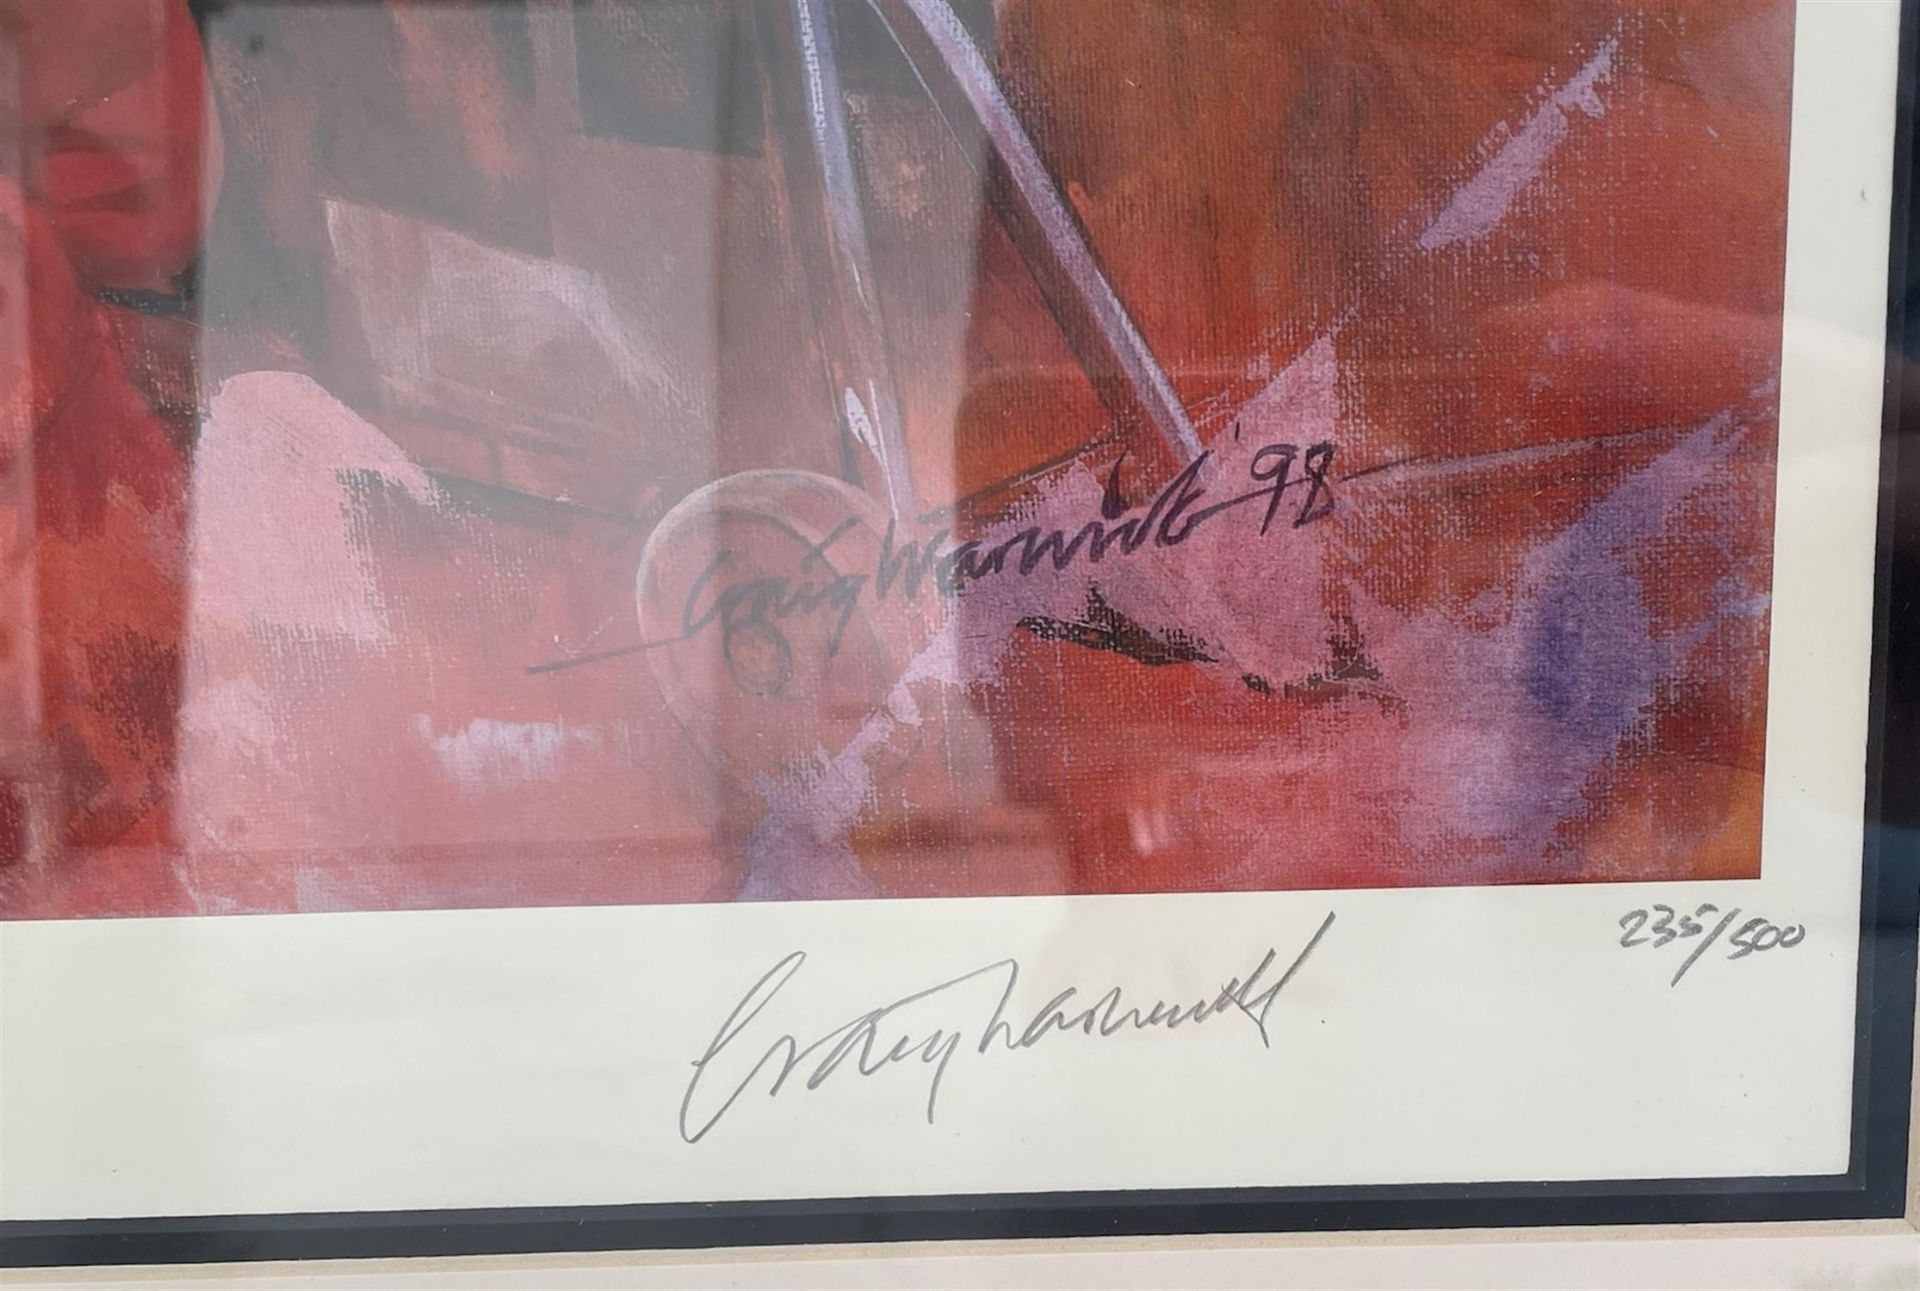 'Ferrari Team Practice' by Craig Warwick signed by Michael Schumacher - Image 2 of 5